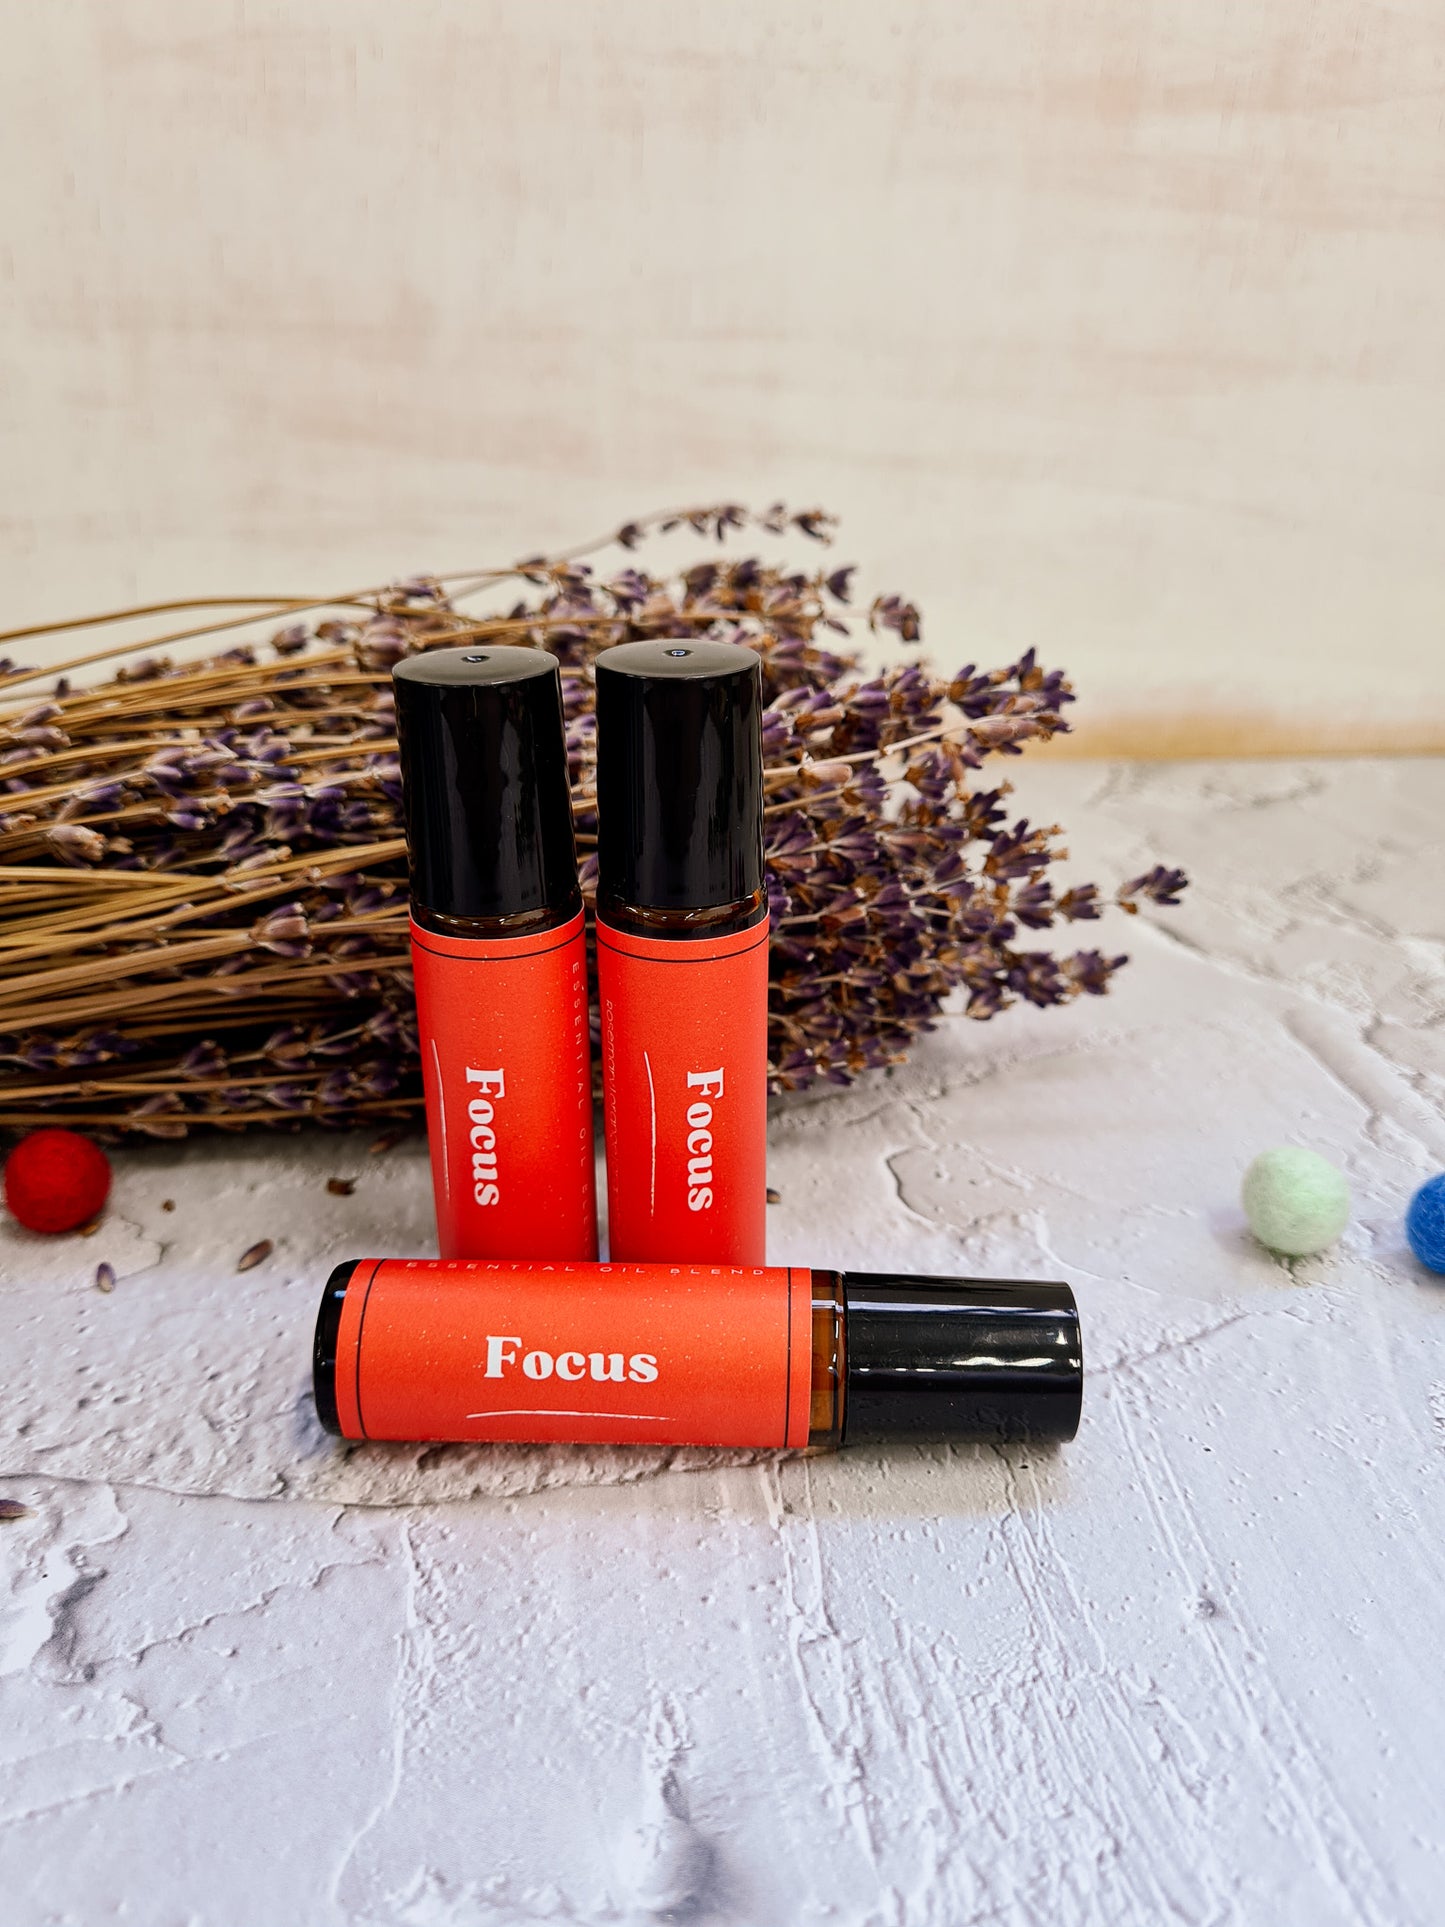 Focus Essential Roller Blend: Pocket Aromatherapy